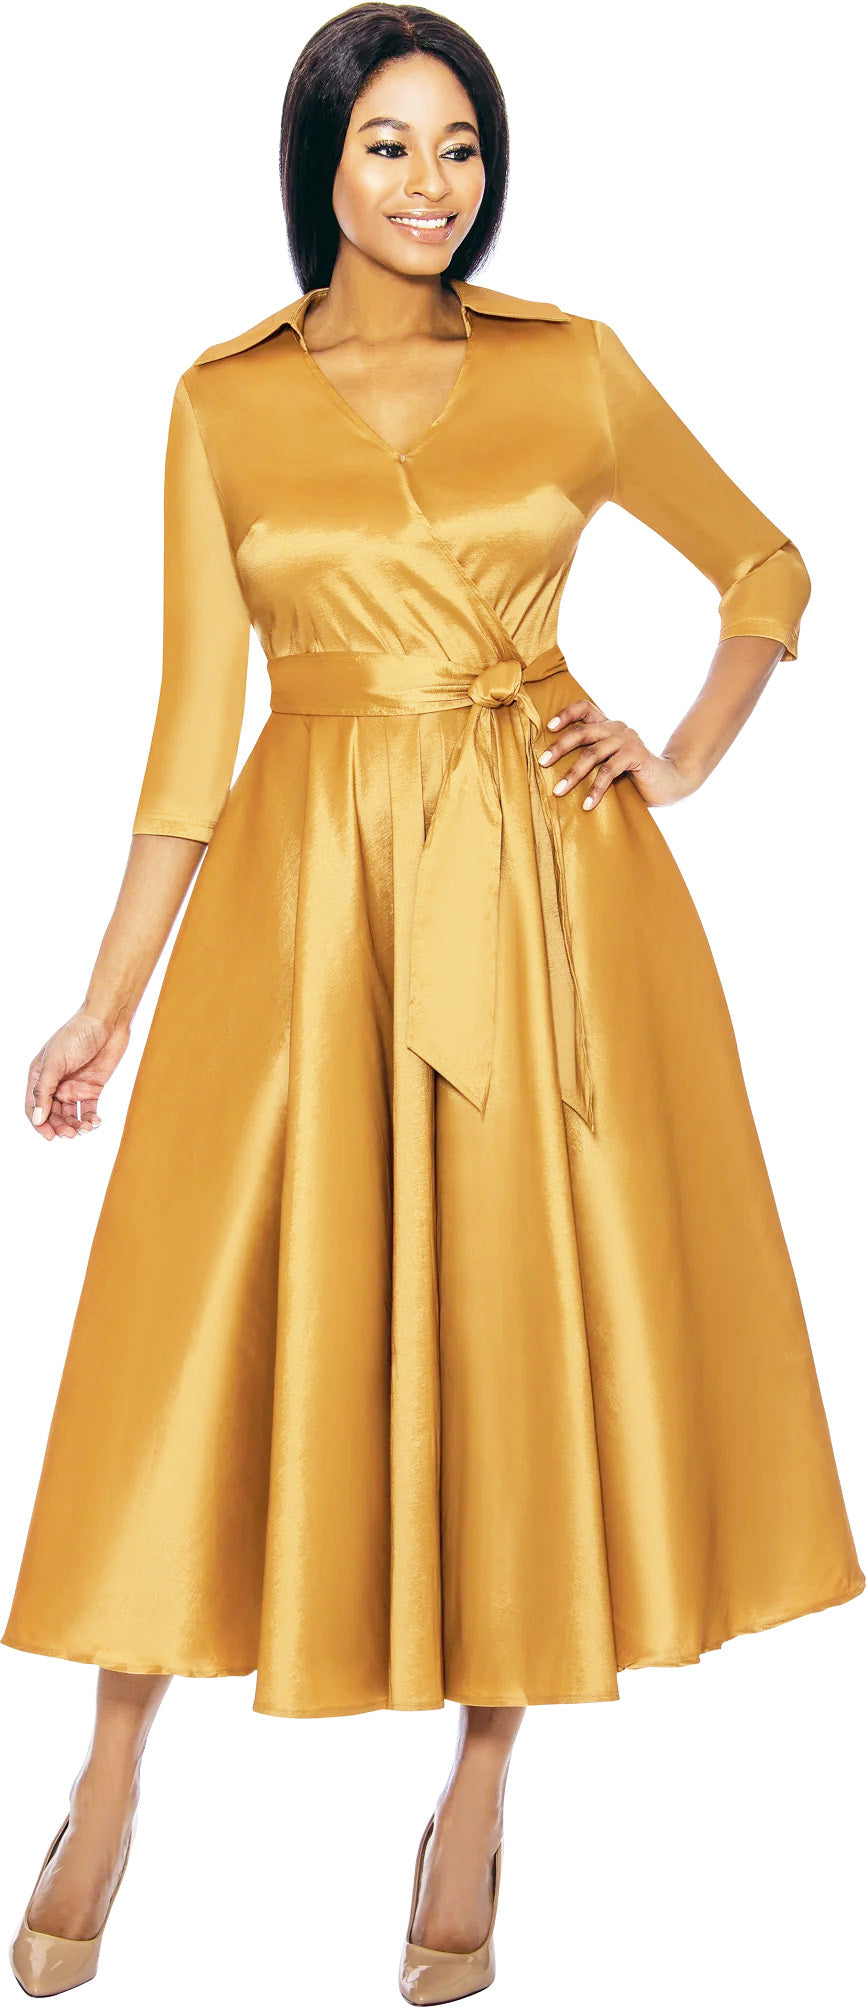 Terramina Church Dress 7869C-Gold - Church Suits For Less